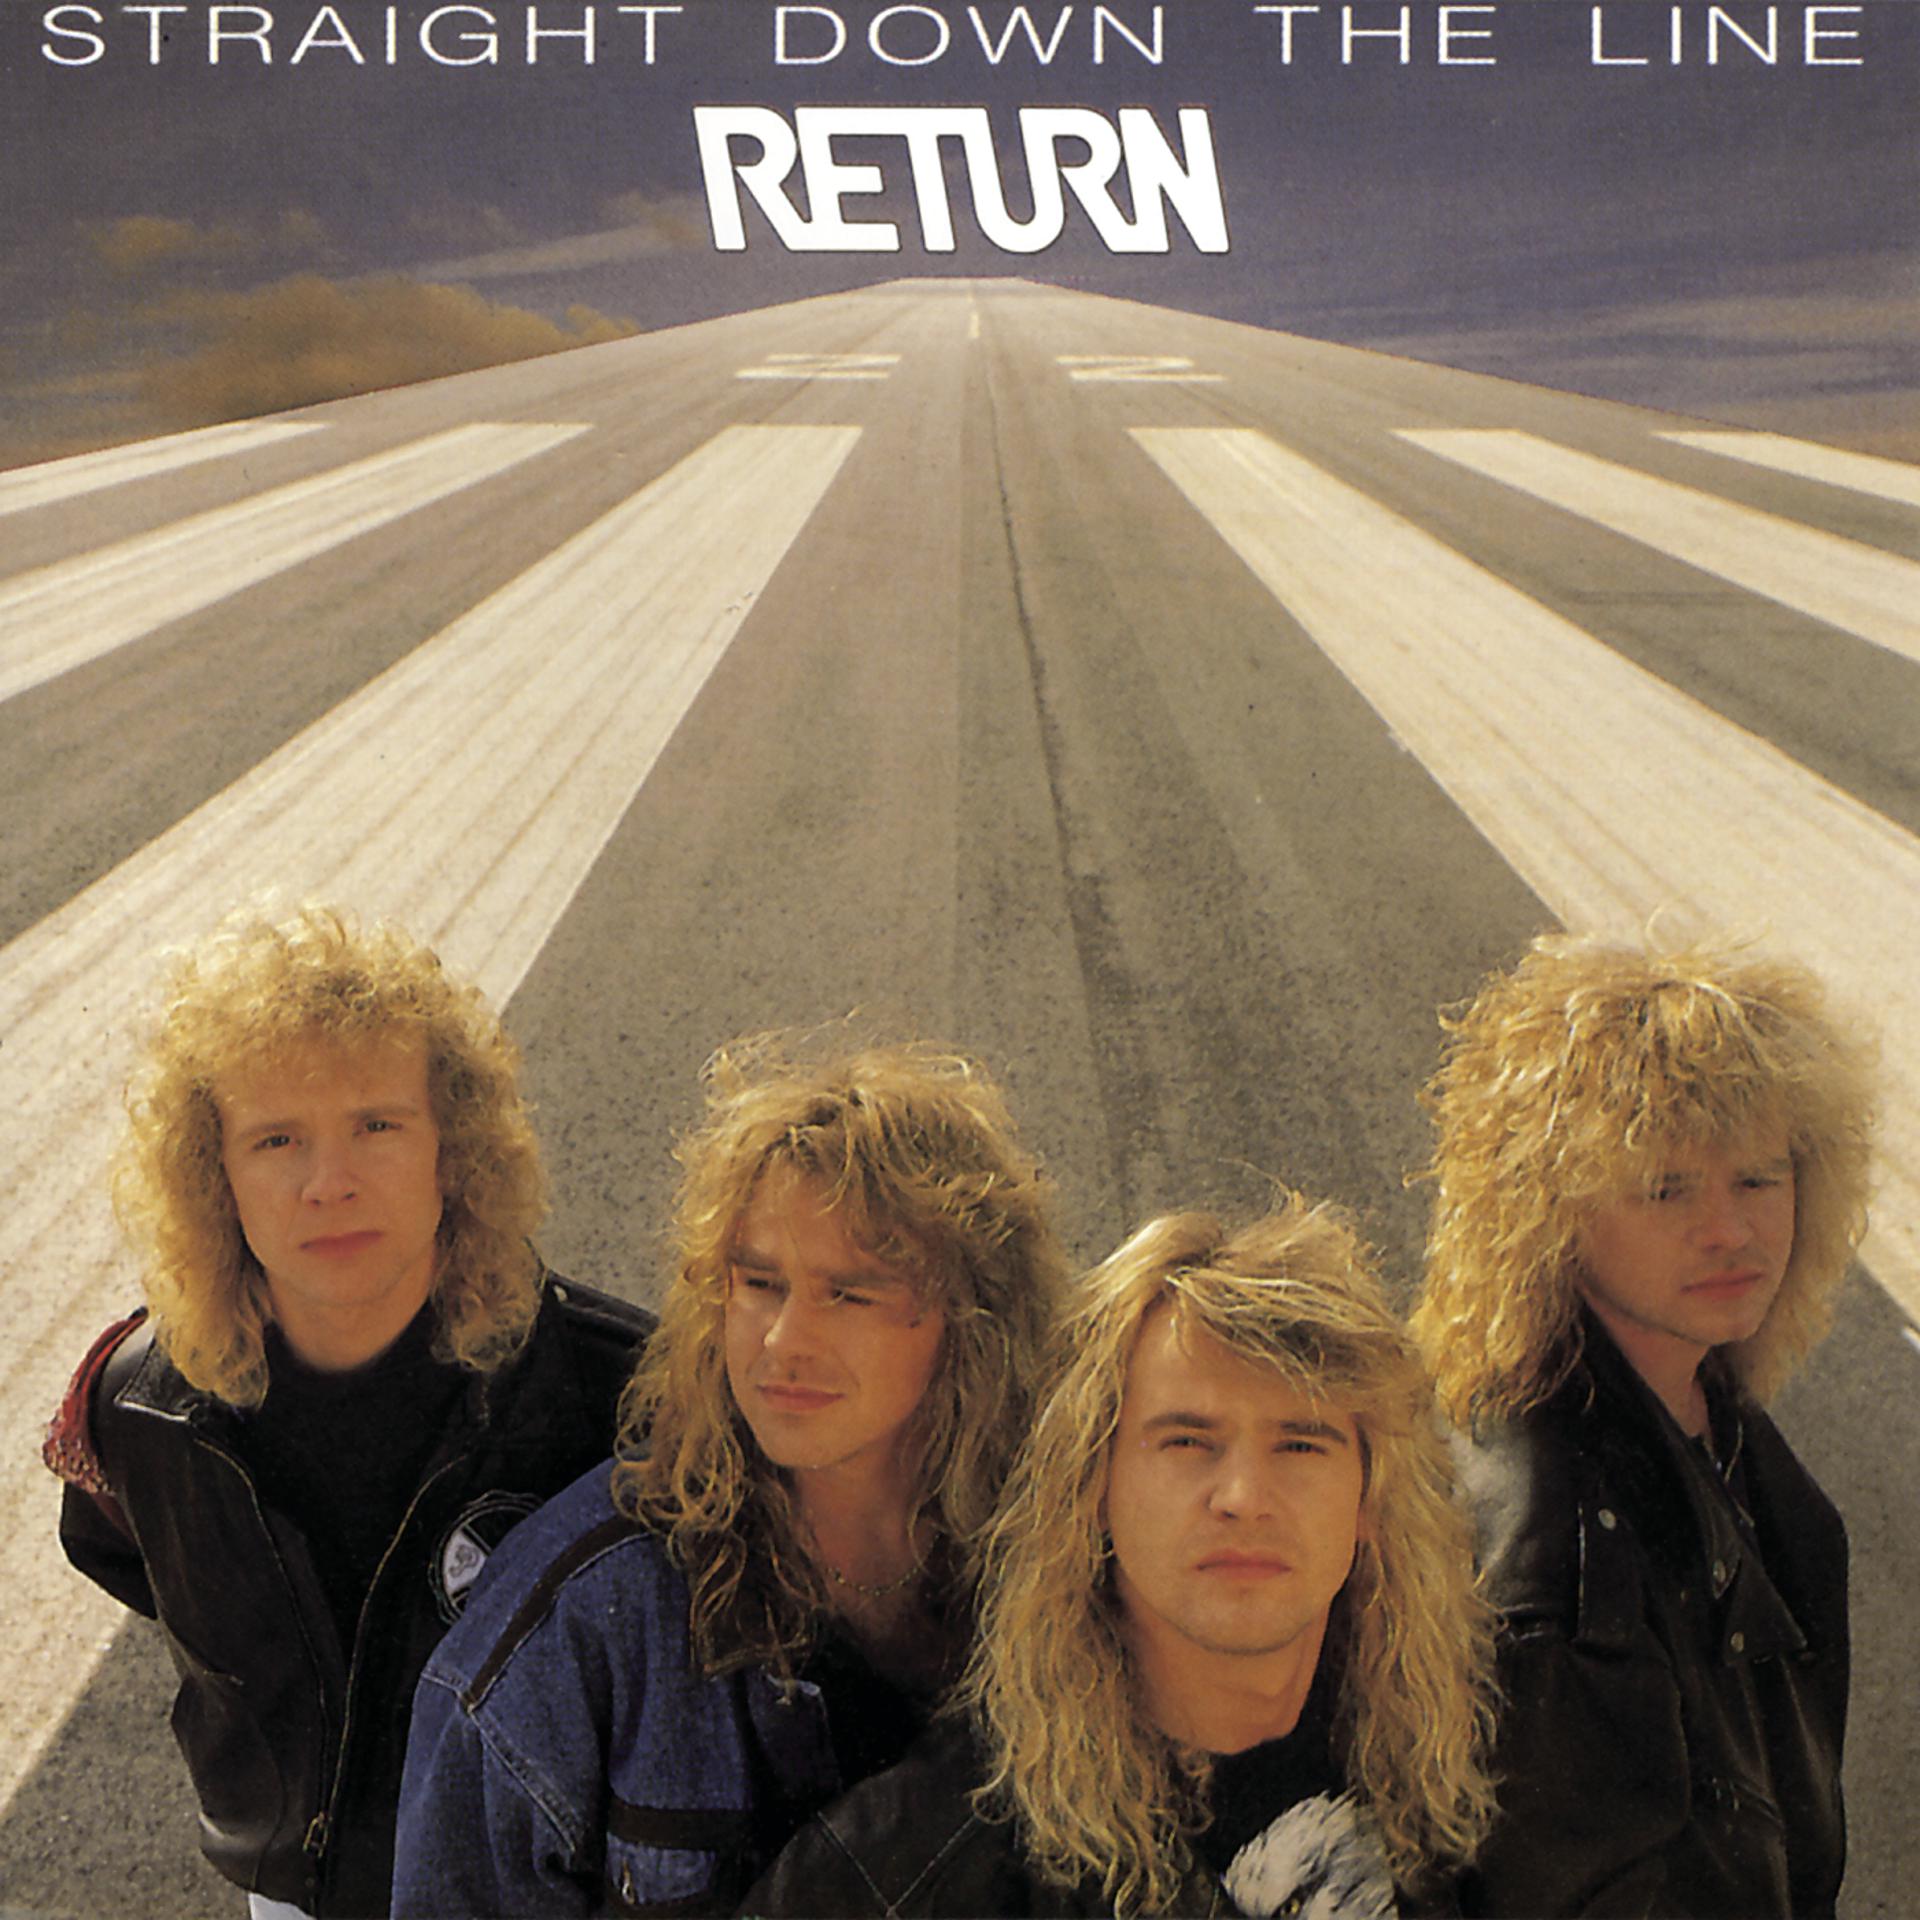 Straight down. Return - 1989 - straight down the line. Группа Return. Return фото альбома straight down the line. Группа Return обложки альбомов.